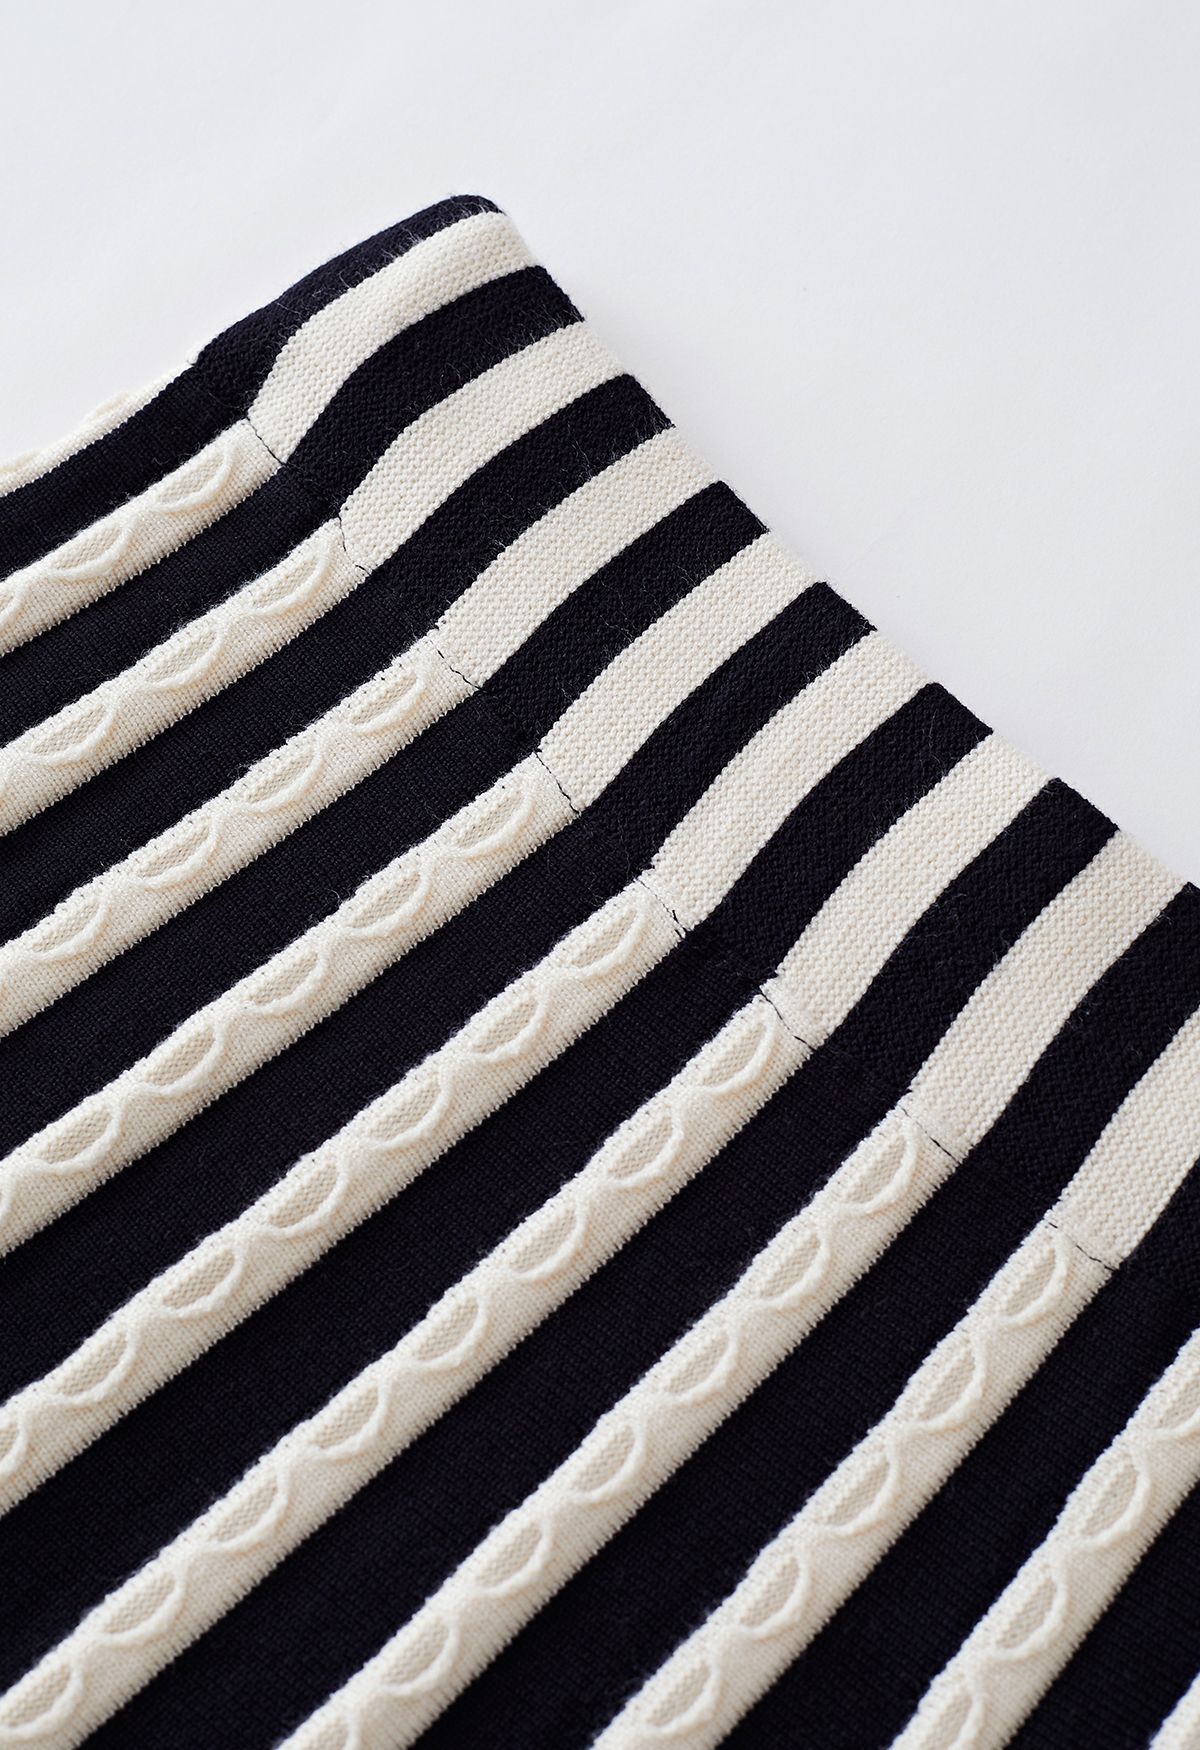 Zebra Stripe Wavy Texture Knit Skirt in Black